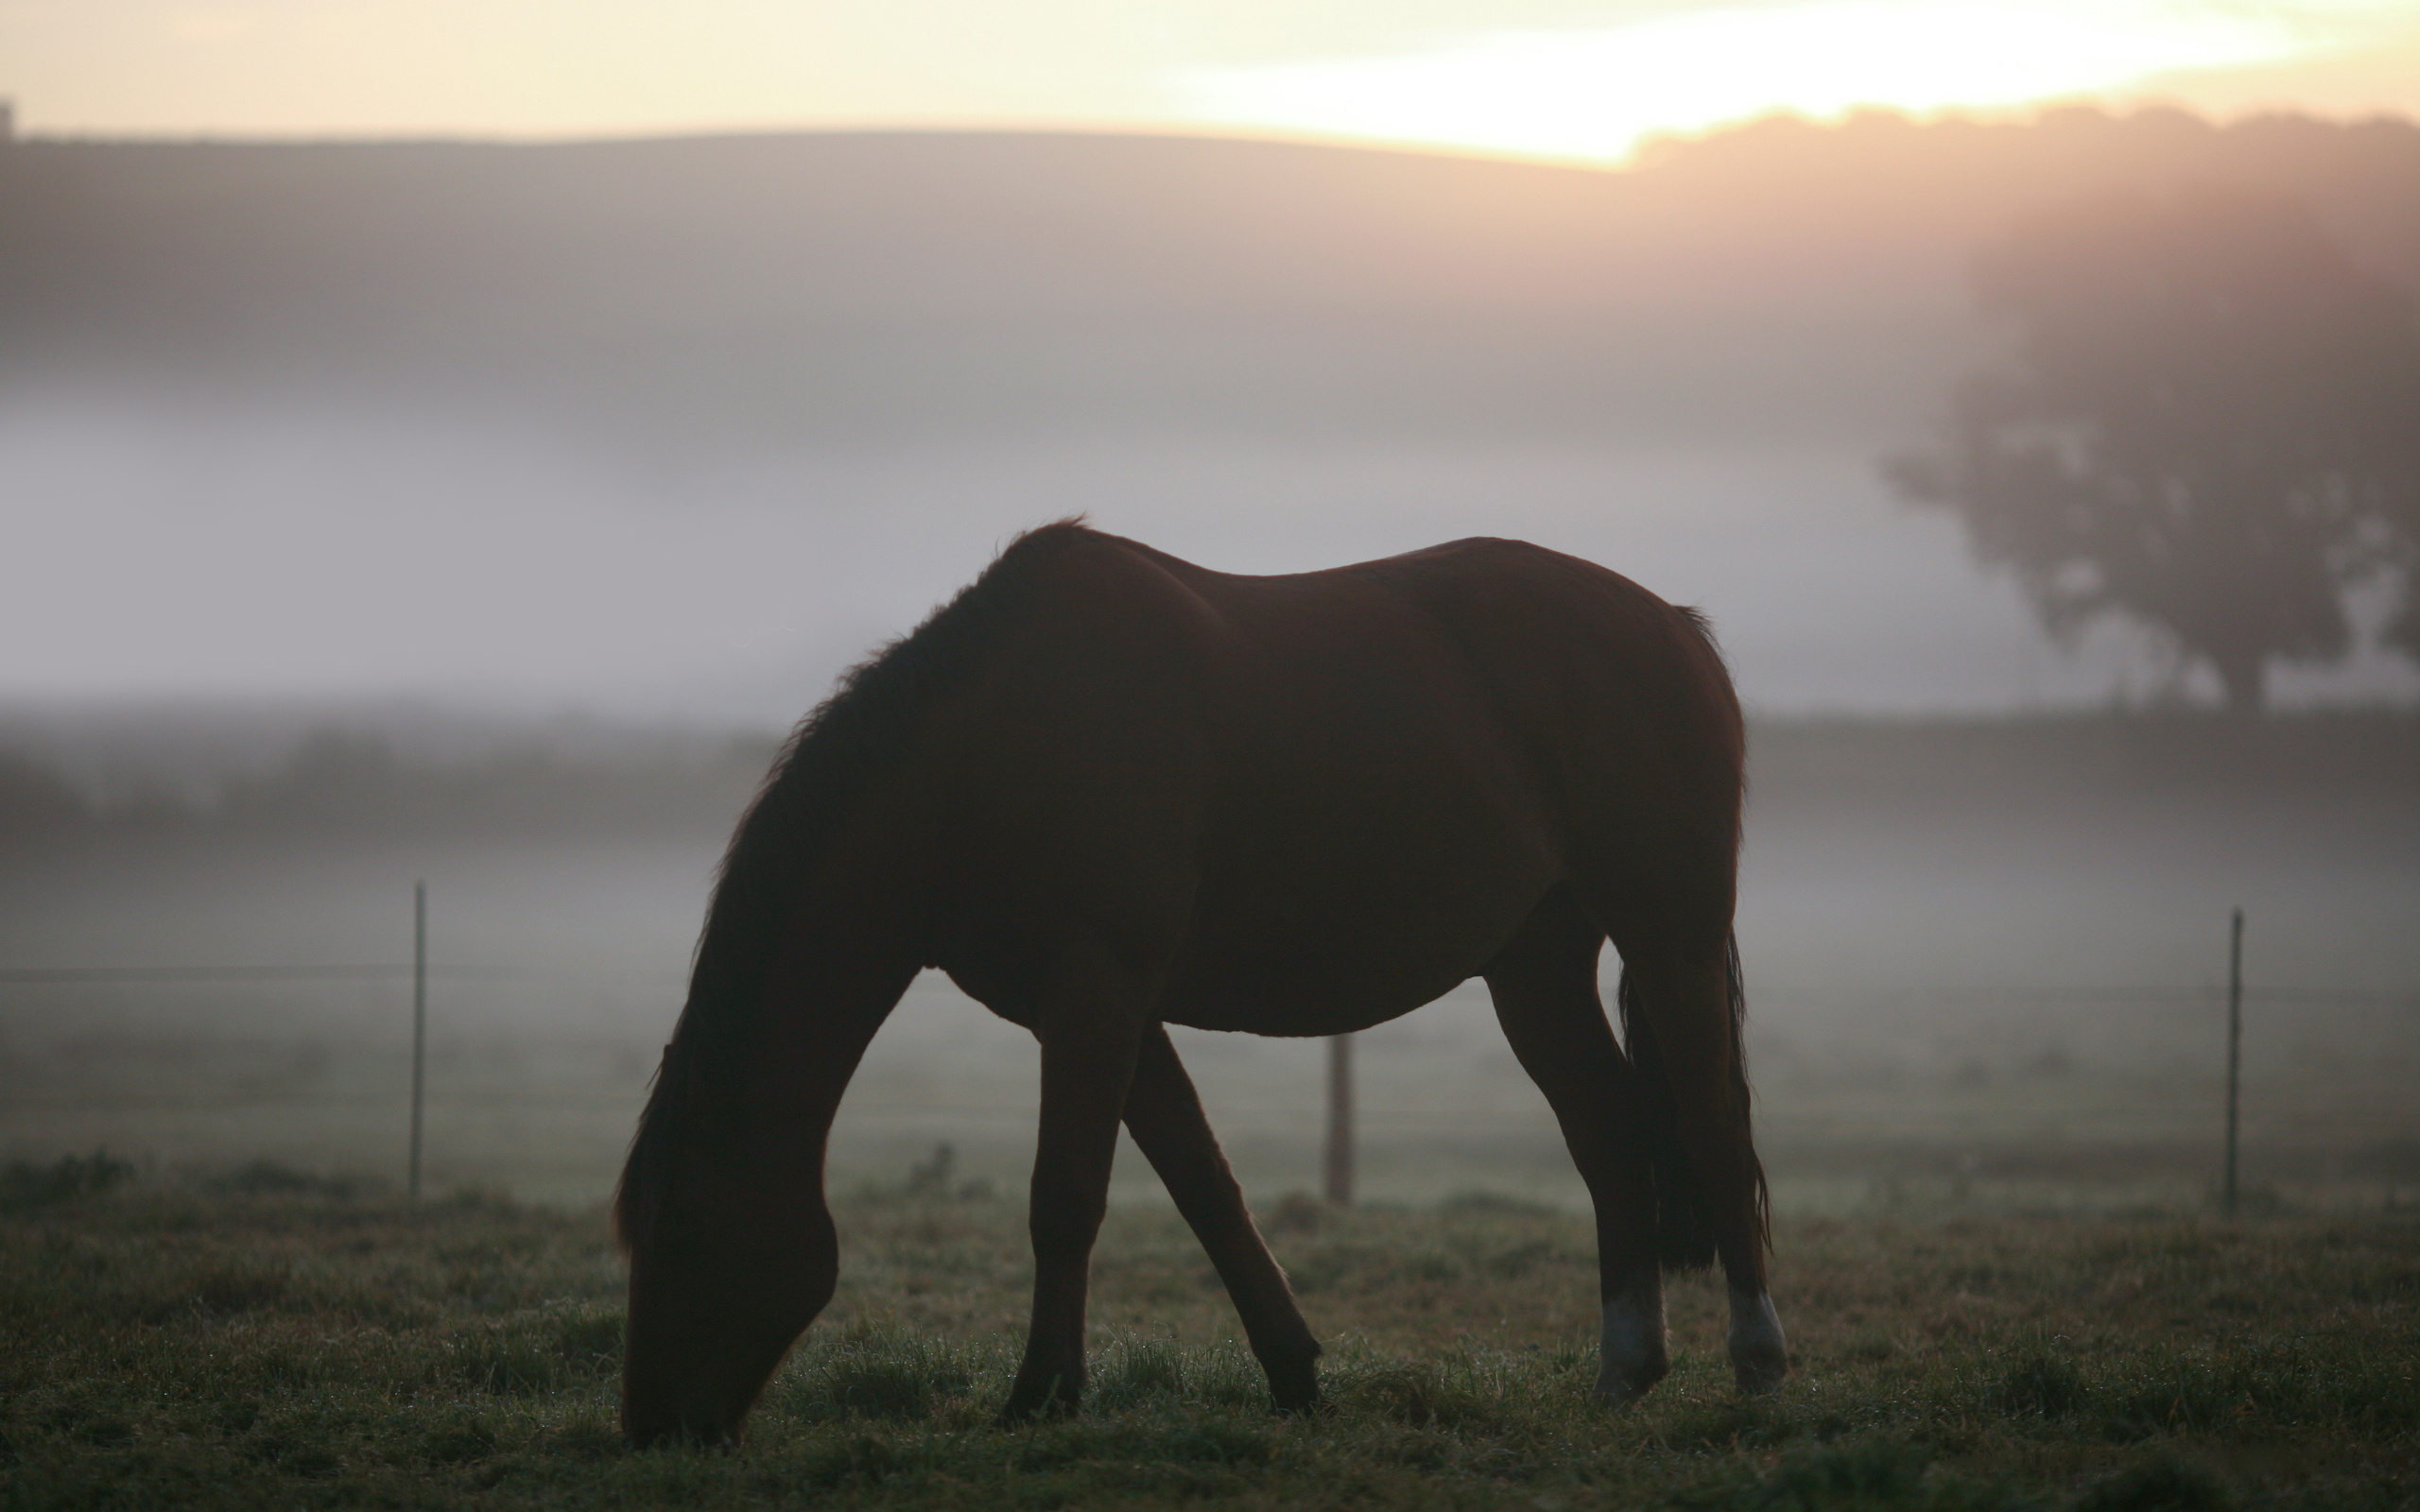 животные, кони, поле, трава, пейзажи, туман, лошади, утро, фото, пастбище